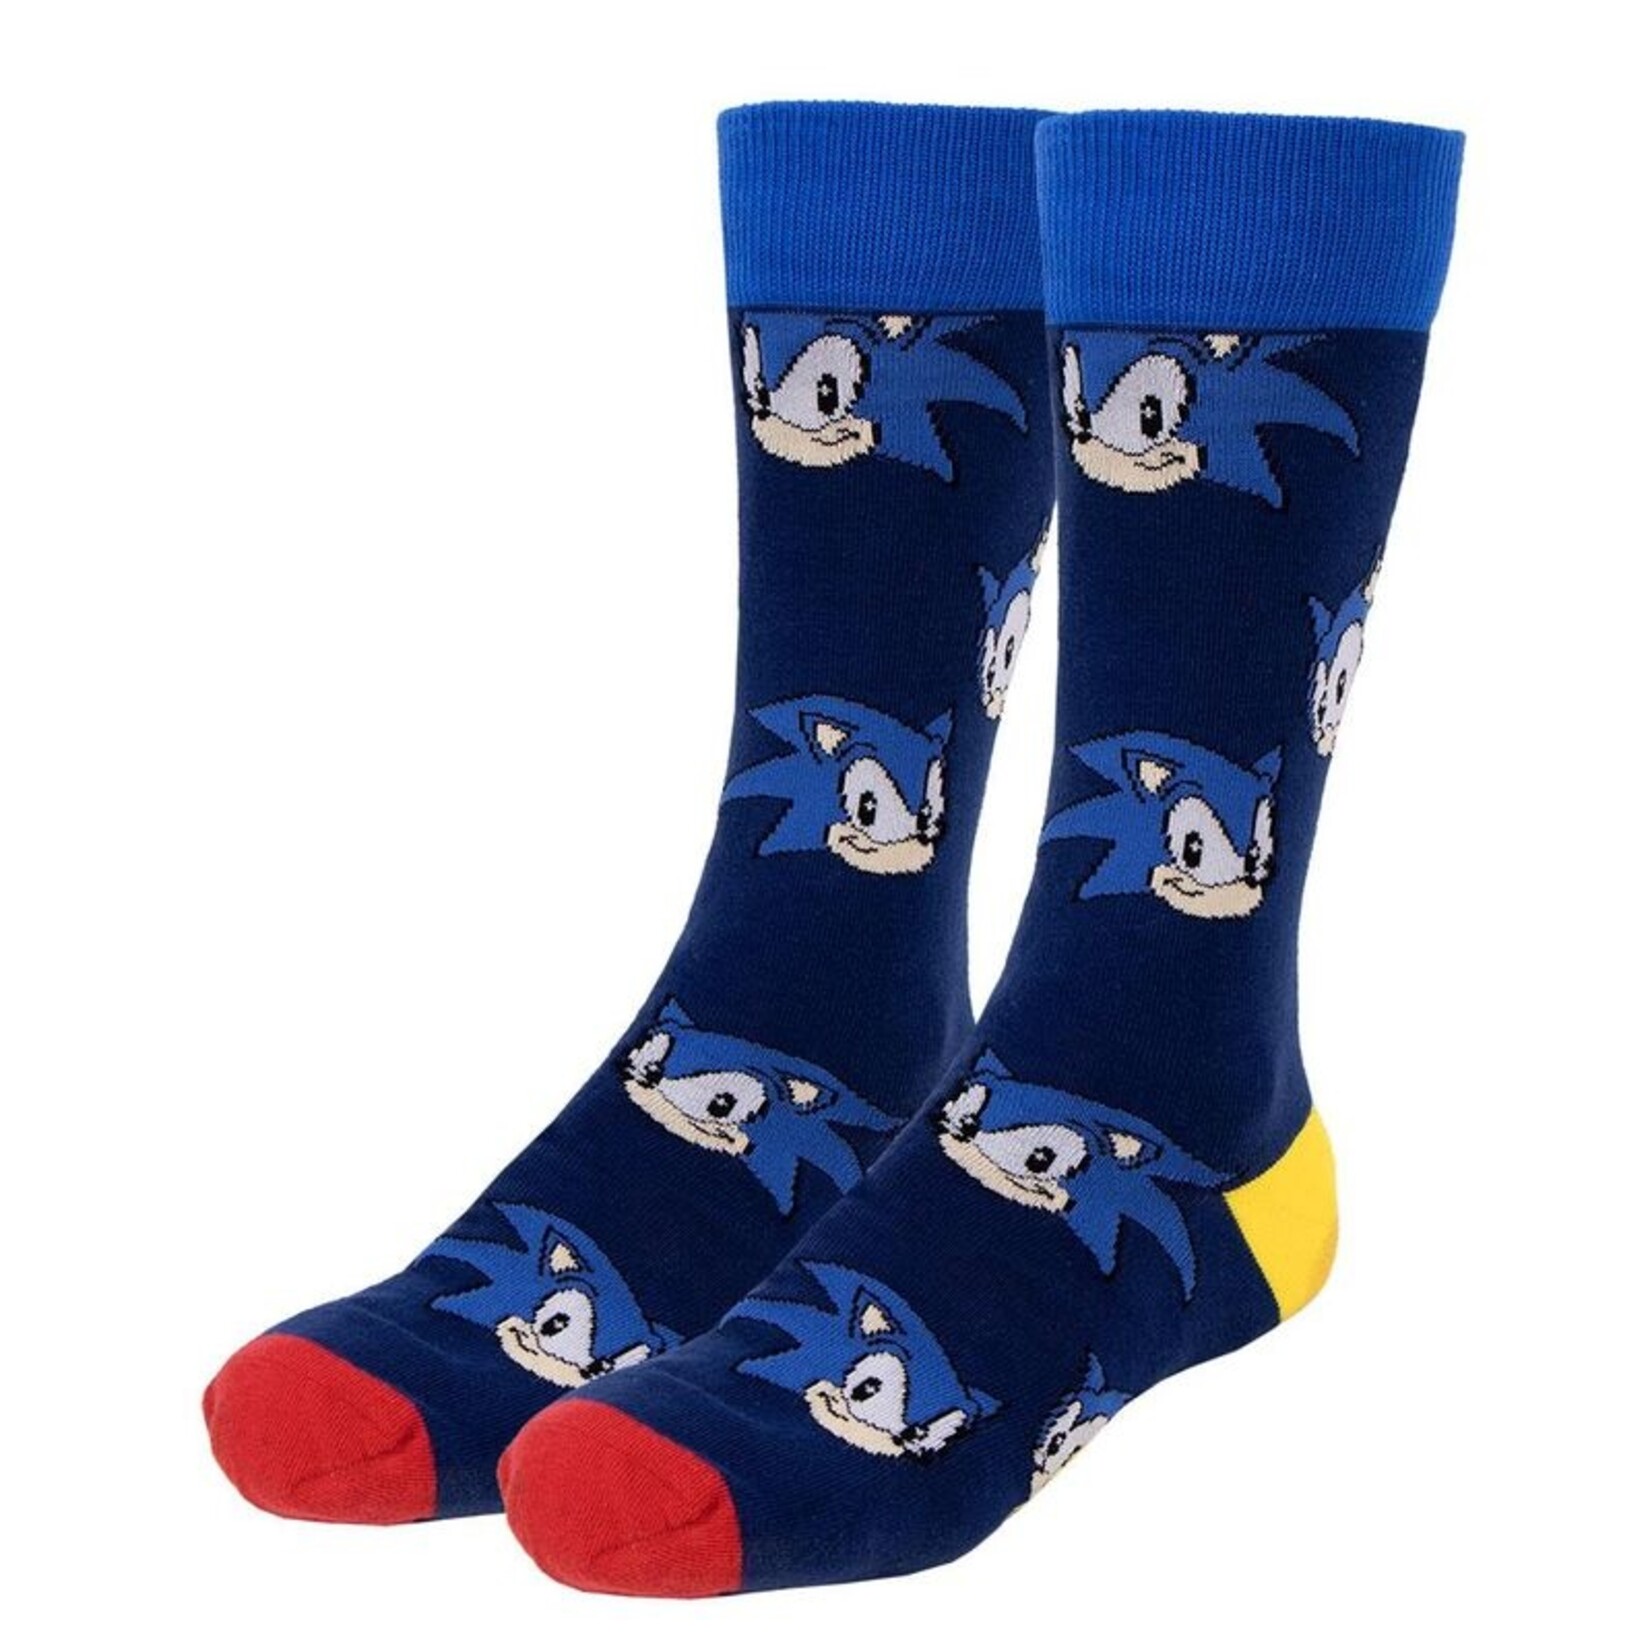 Cerdá Cerdá Sonic The Hedgehog Socks 3-Pack Size 36-41